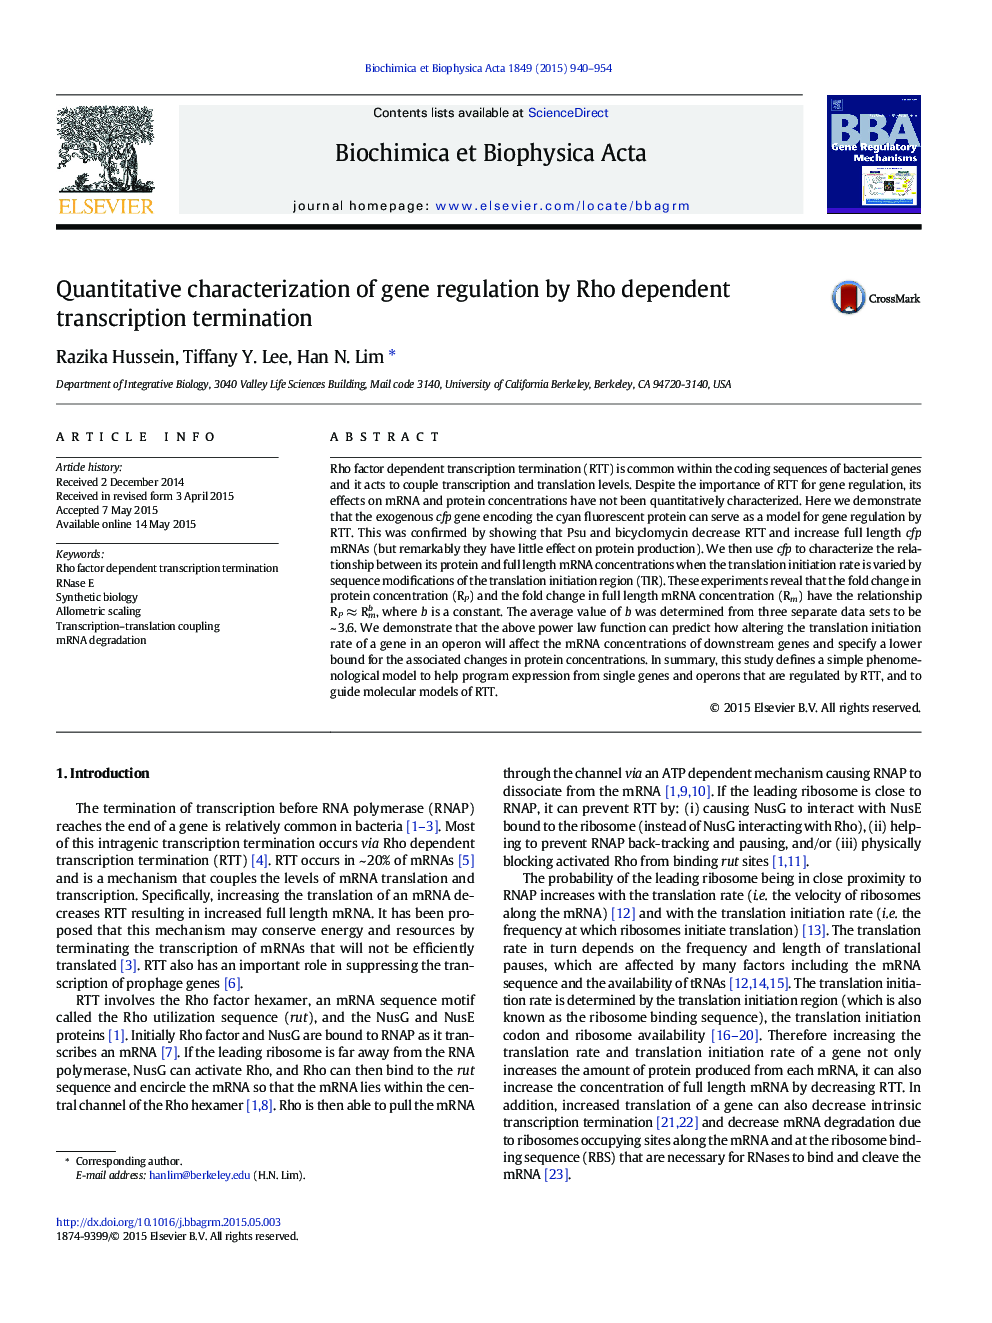 Quantitative characterization of gene regulation by Rho dependent transcription termination